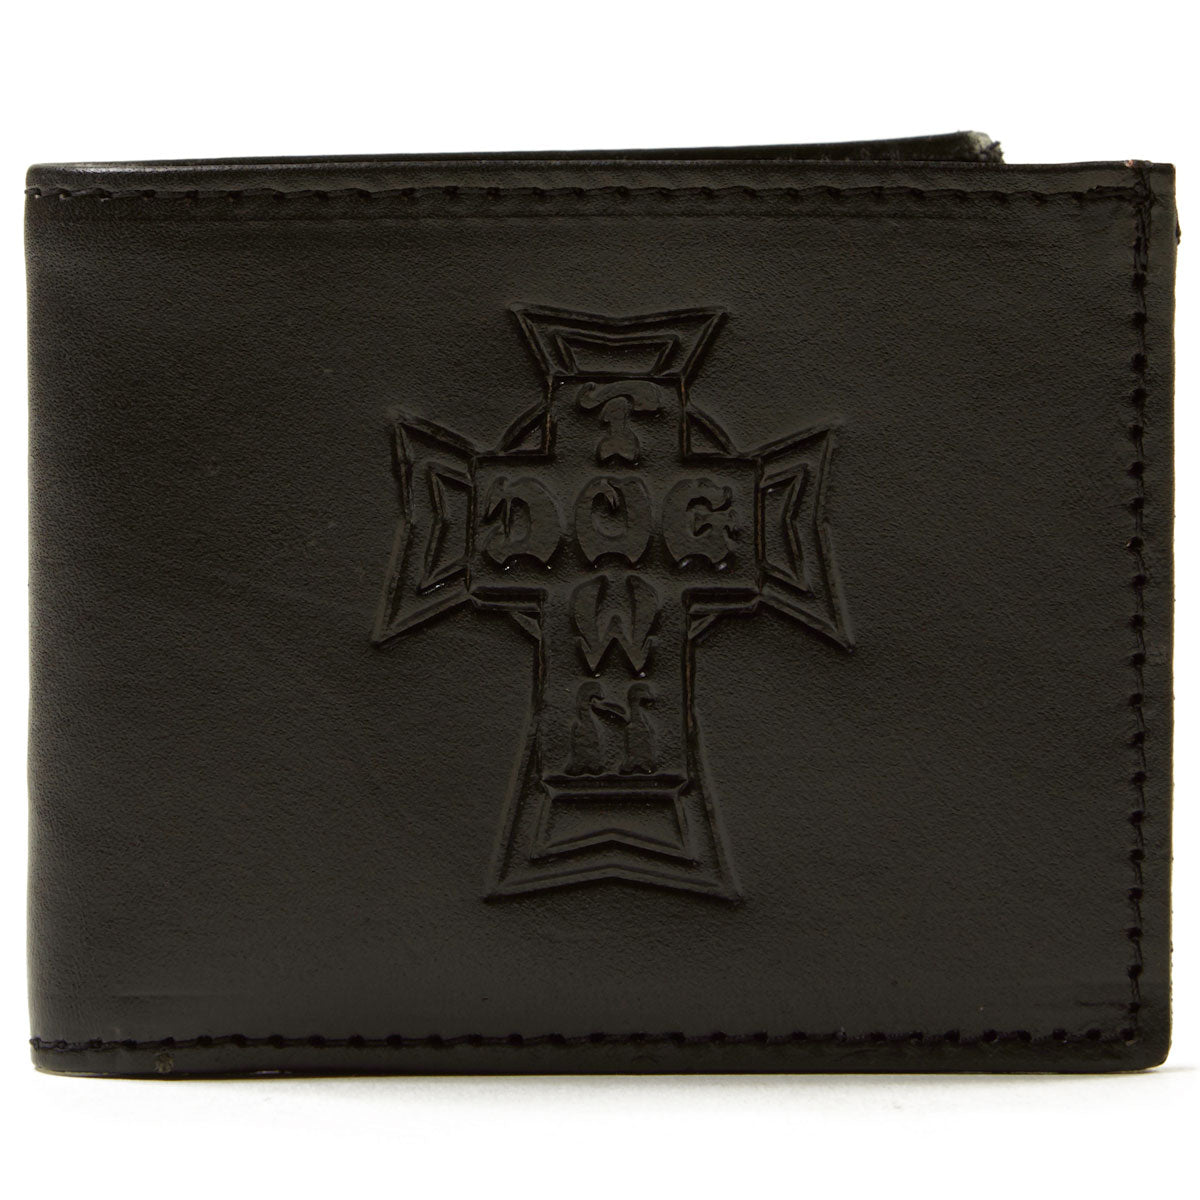 Dogtown Leather Billfold Wallet - Black image 1